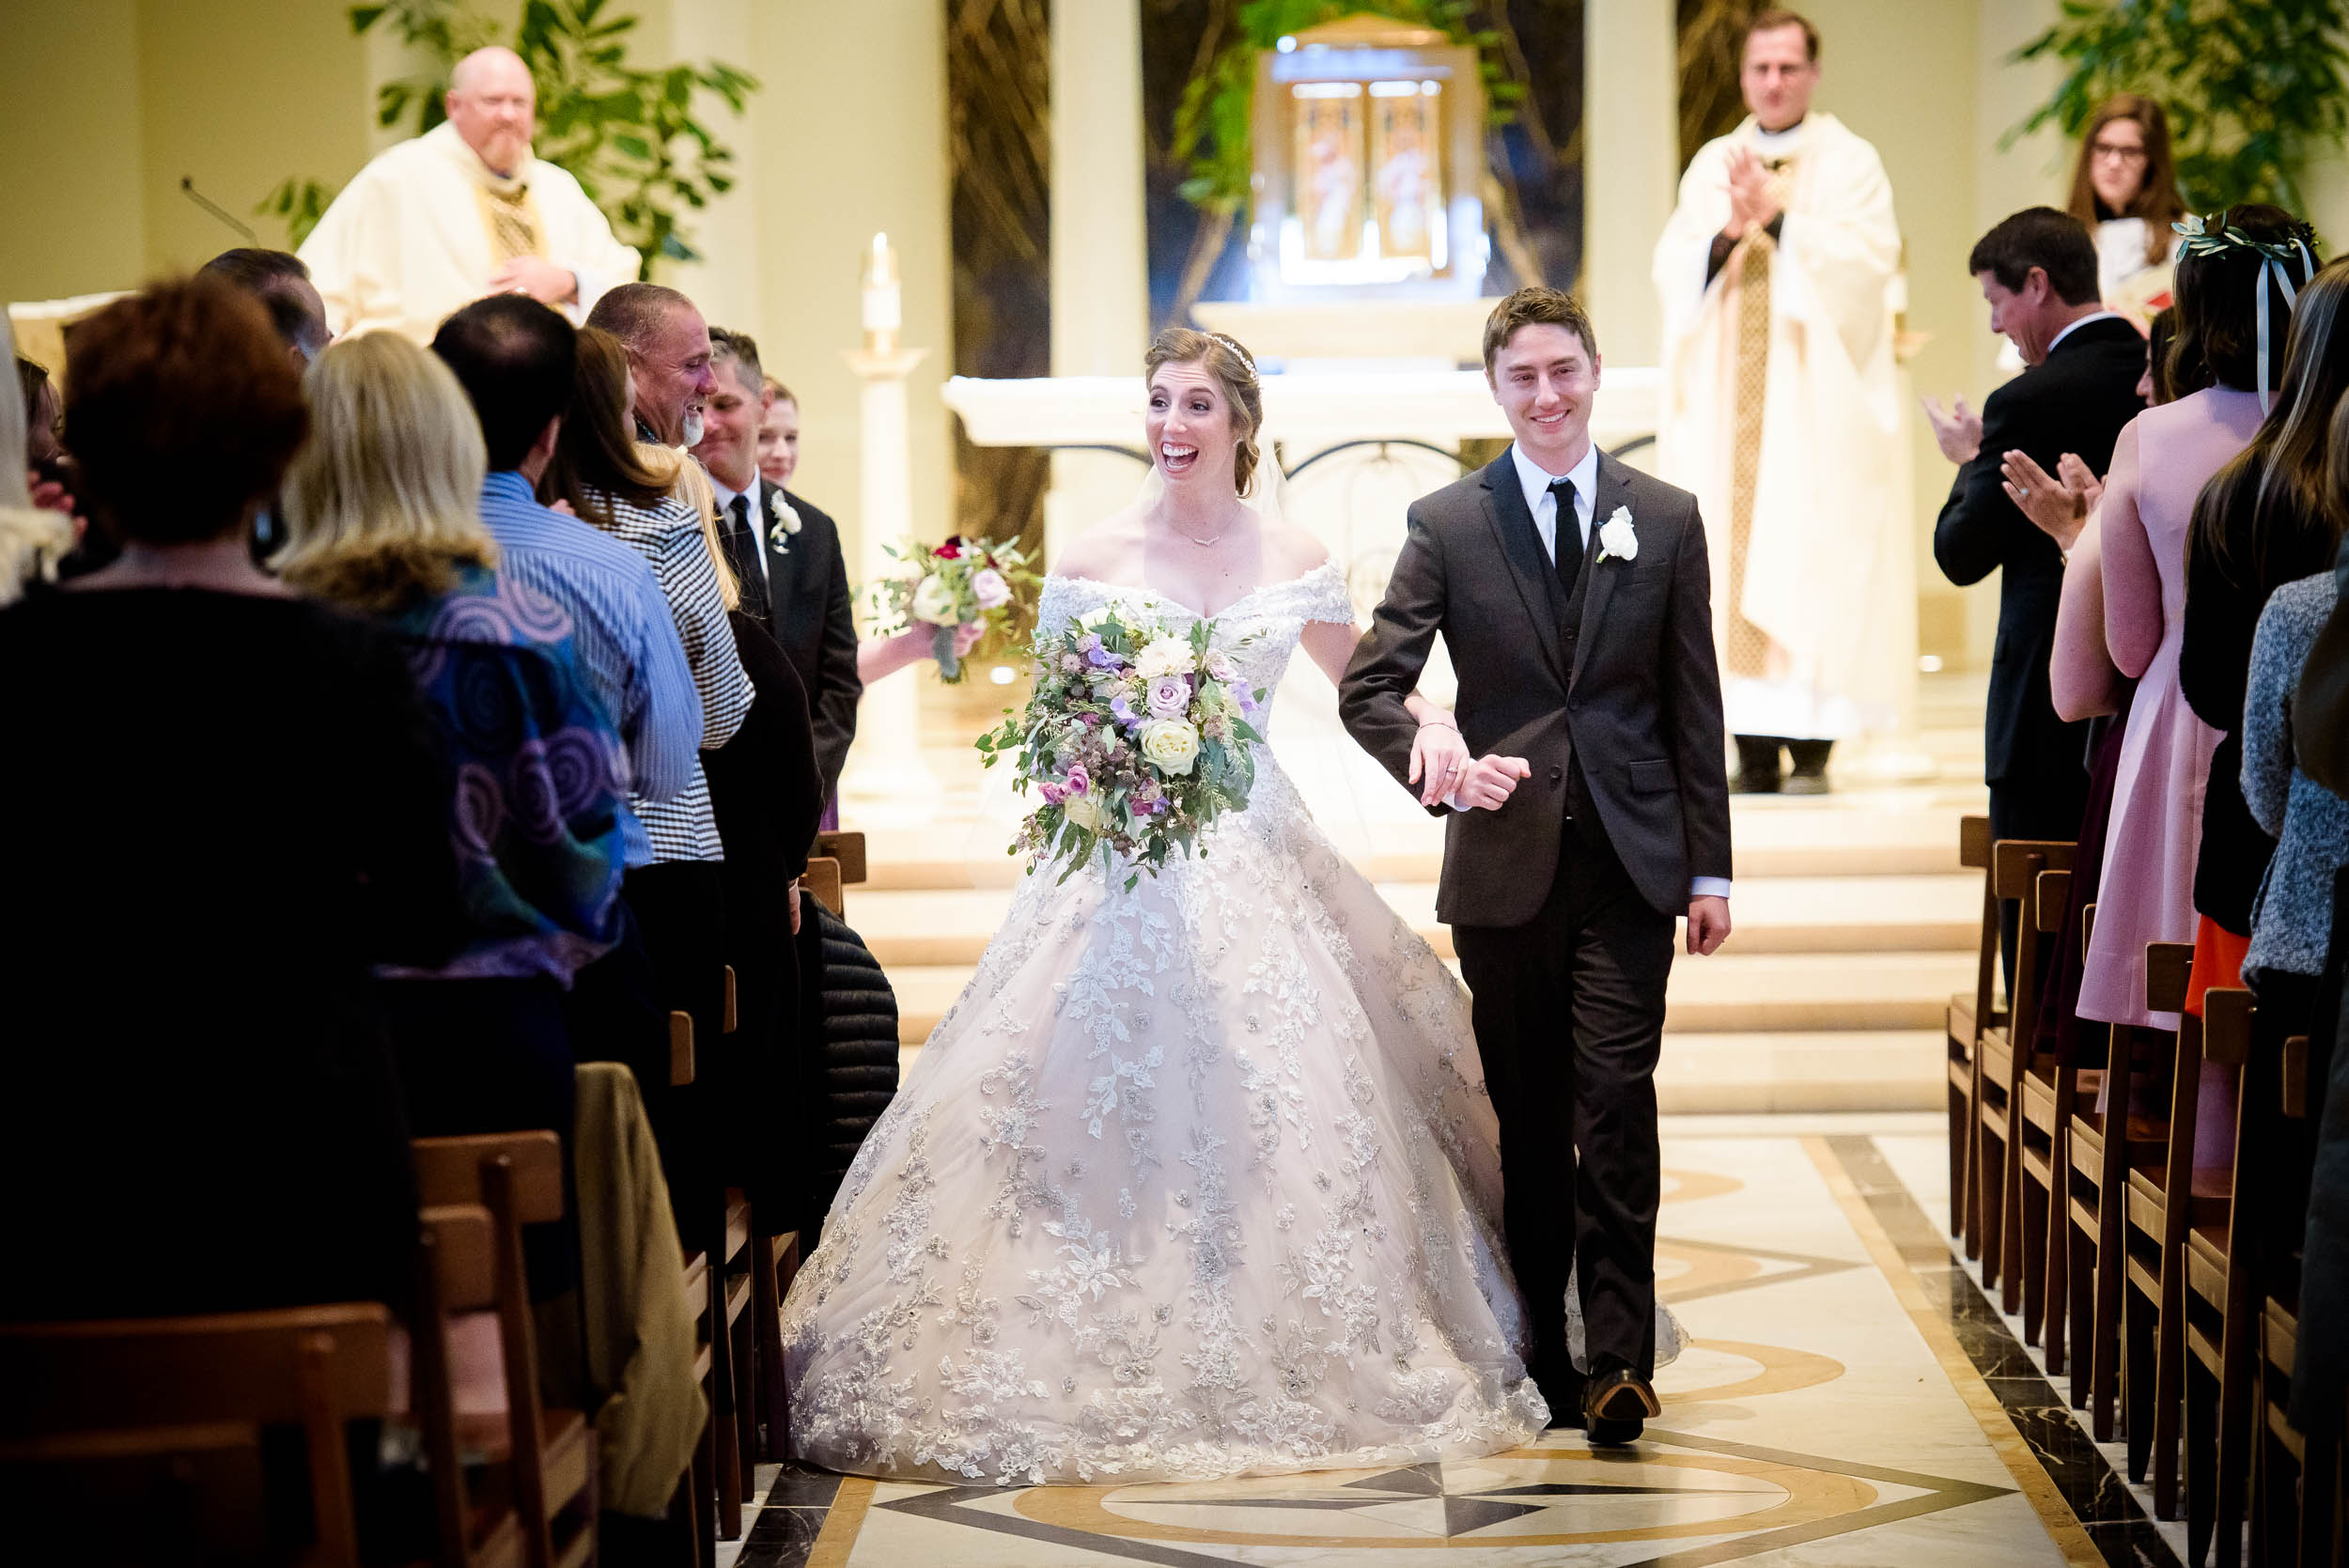 Bride and groom walk down the aisle during a wedding ceremony at Madonna Della Strada.